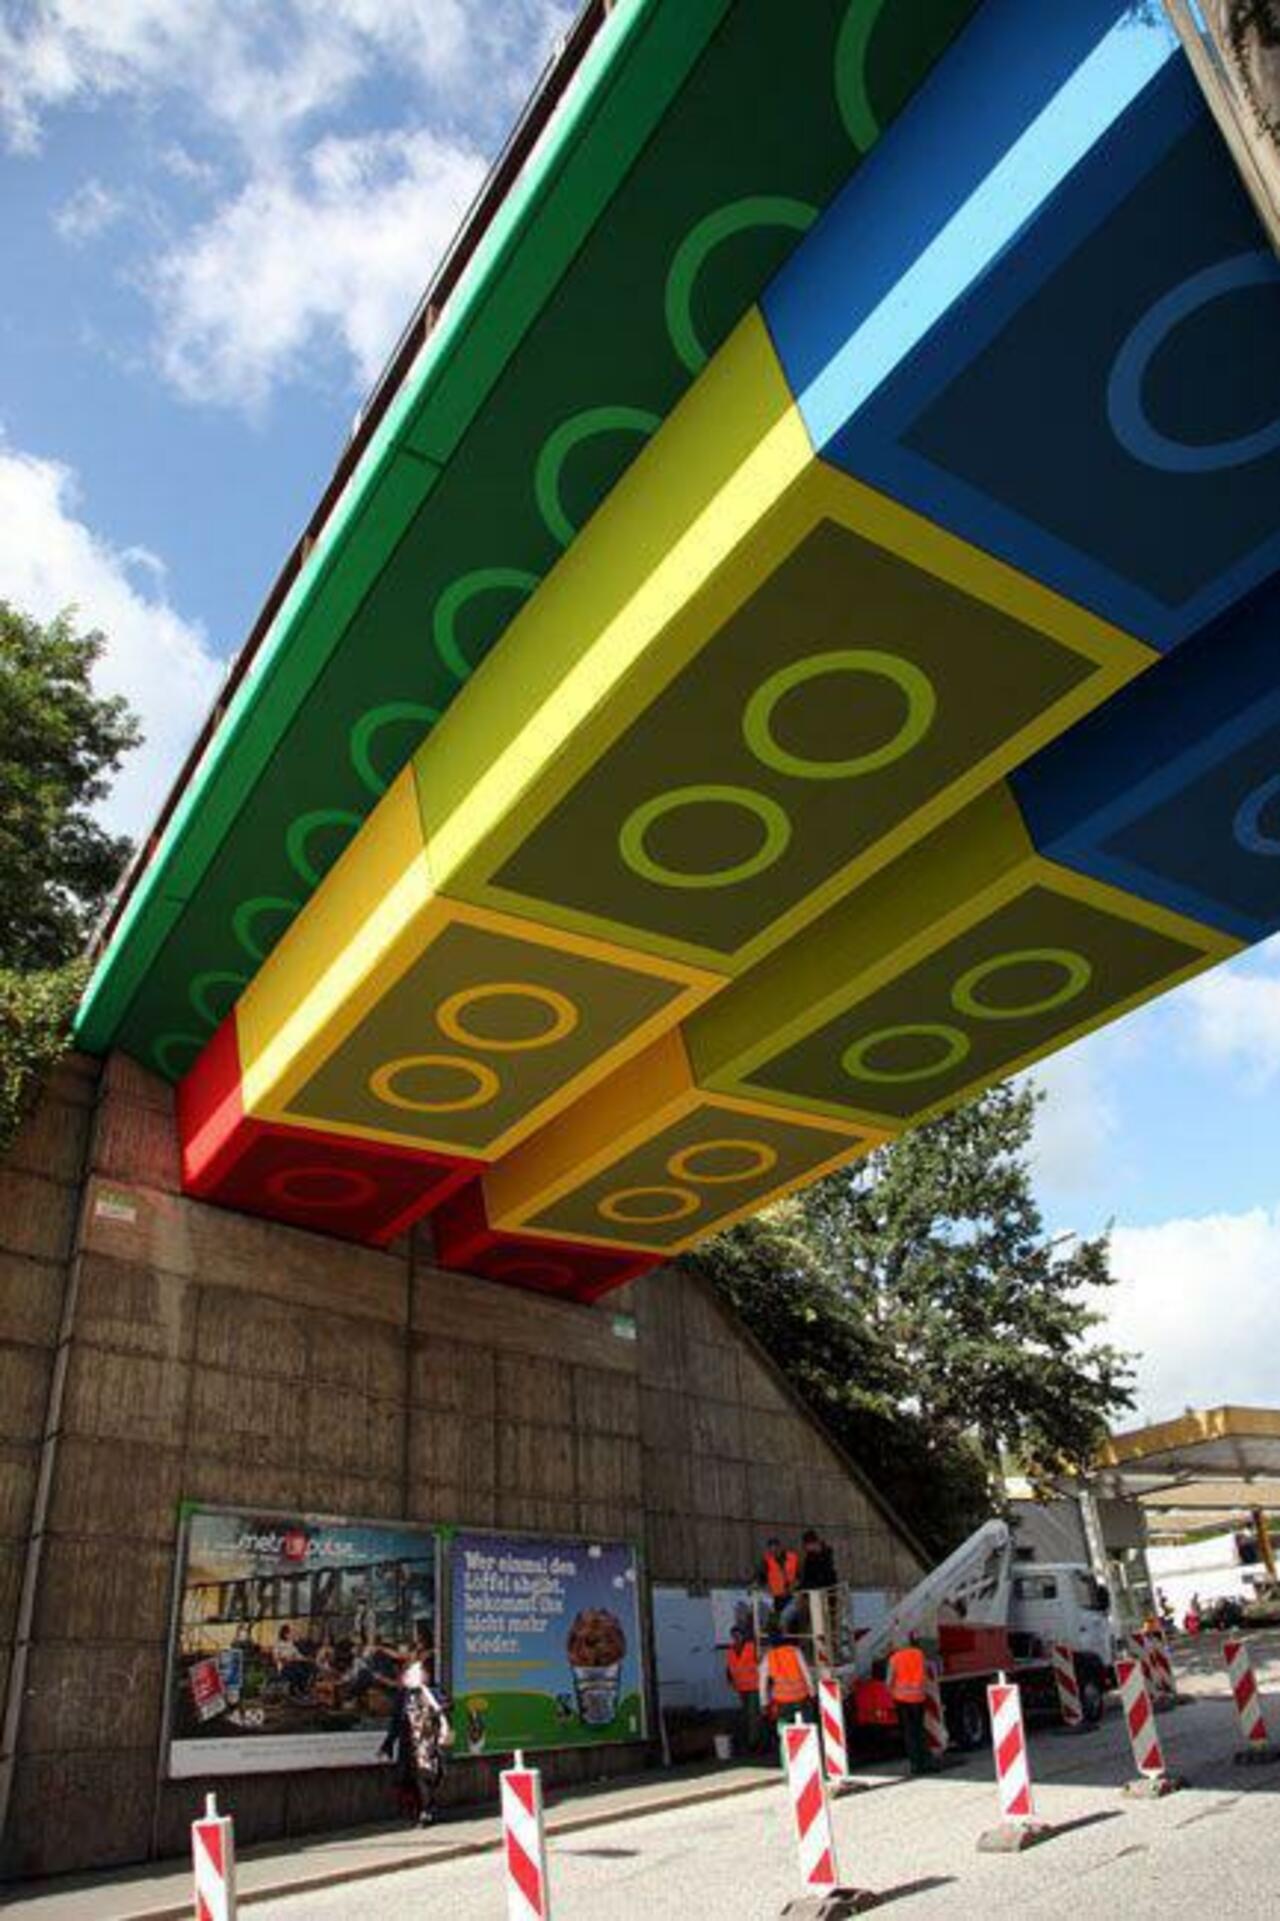 #switch #LEGO into #streetart #germany #bedifferent #graffiti #arte #art http://t.co/858gmsknJq